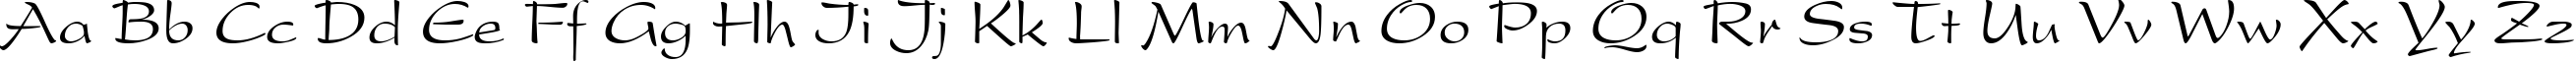 Пример написания английского алфавита шрифтом Oskord